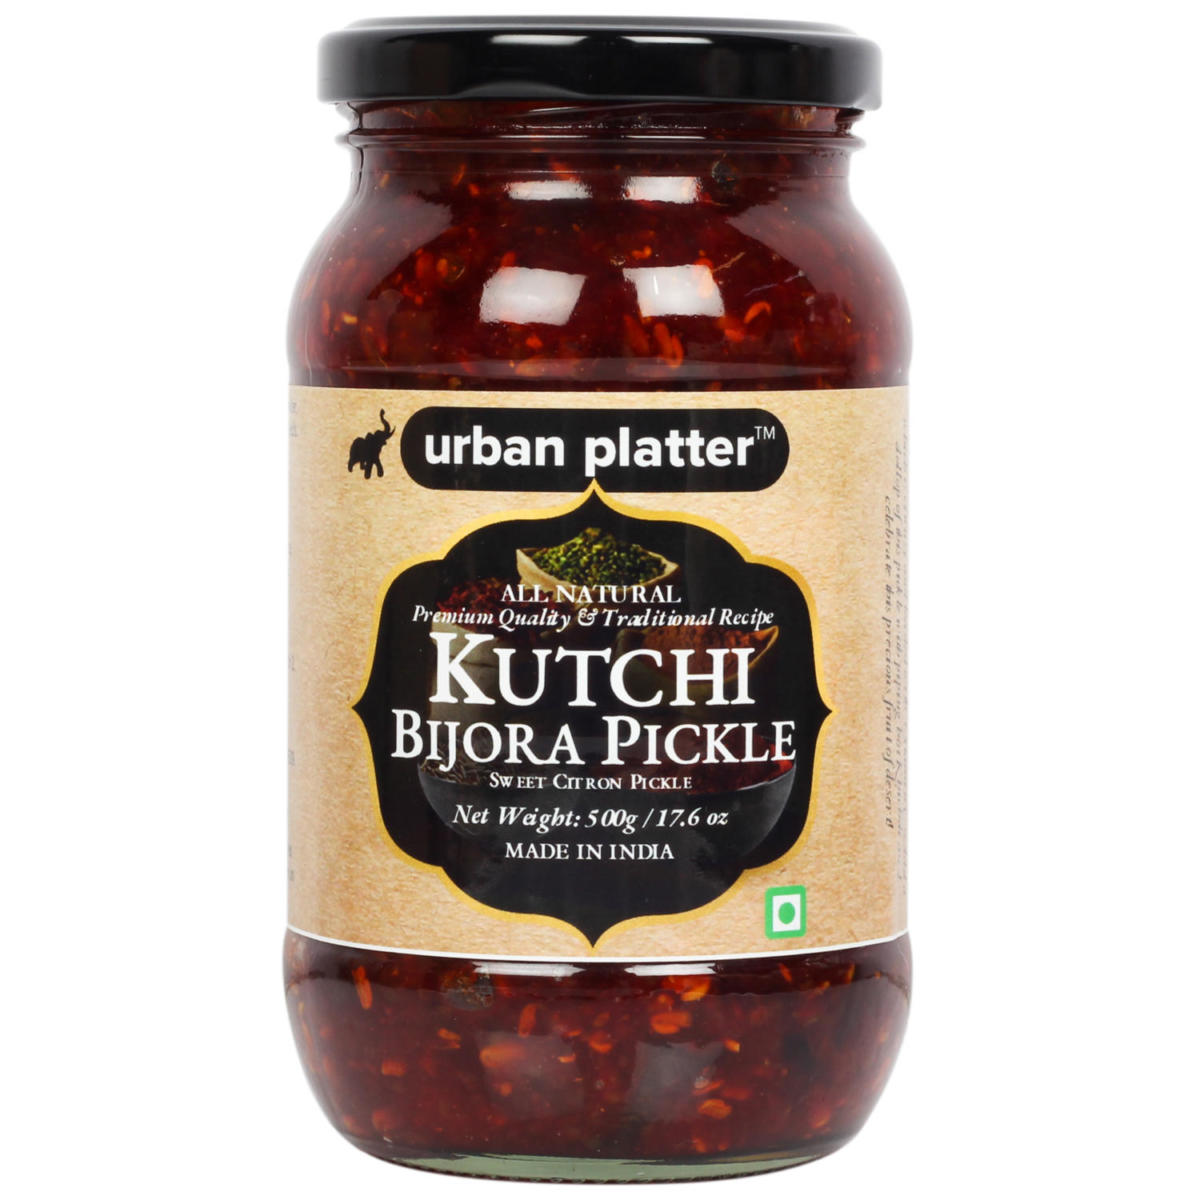 Urban Platter Kutchi Bijora Pickle, 450g / 16oz [Sweet Citron Pickle